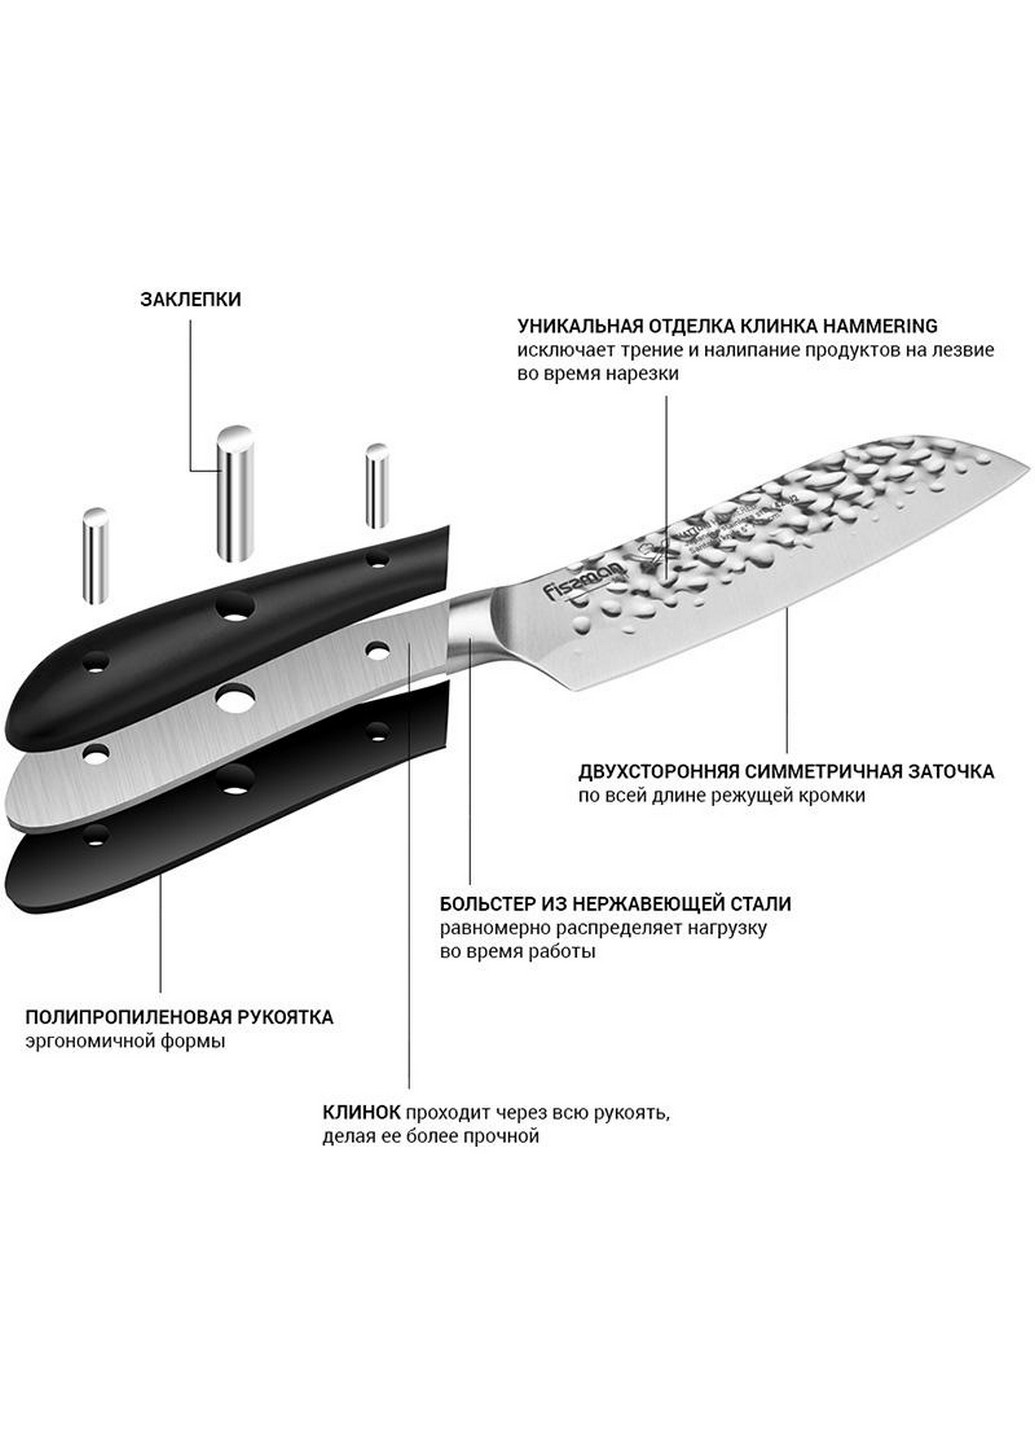 Нож сантоку Hattori hammered из нержавеющей стали 13х10 см Fissman (267150235)